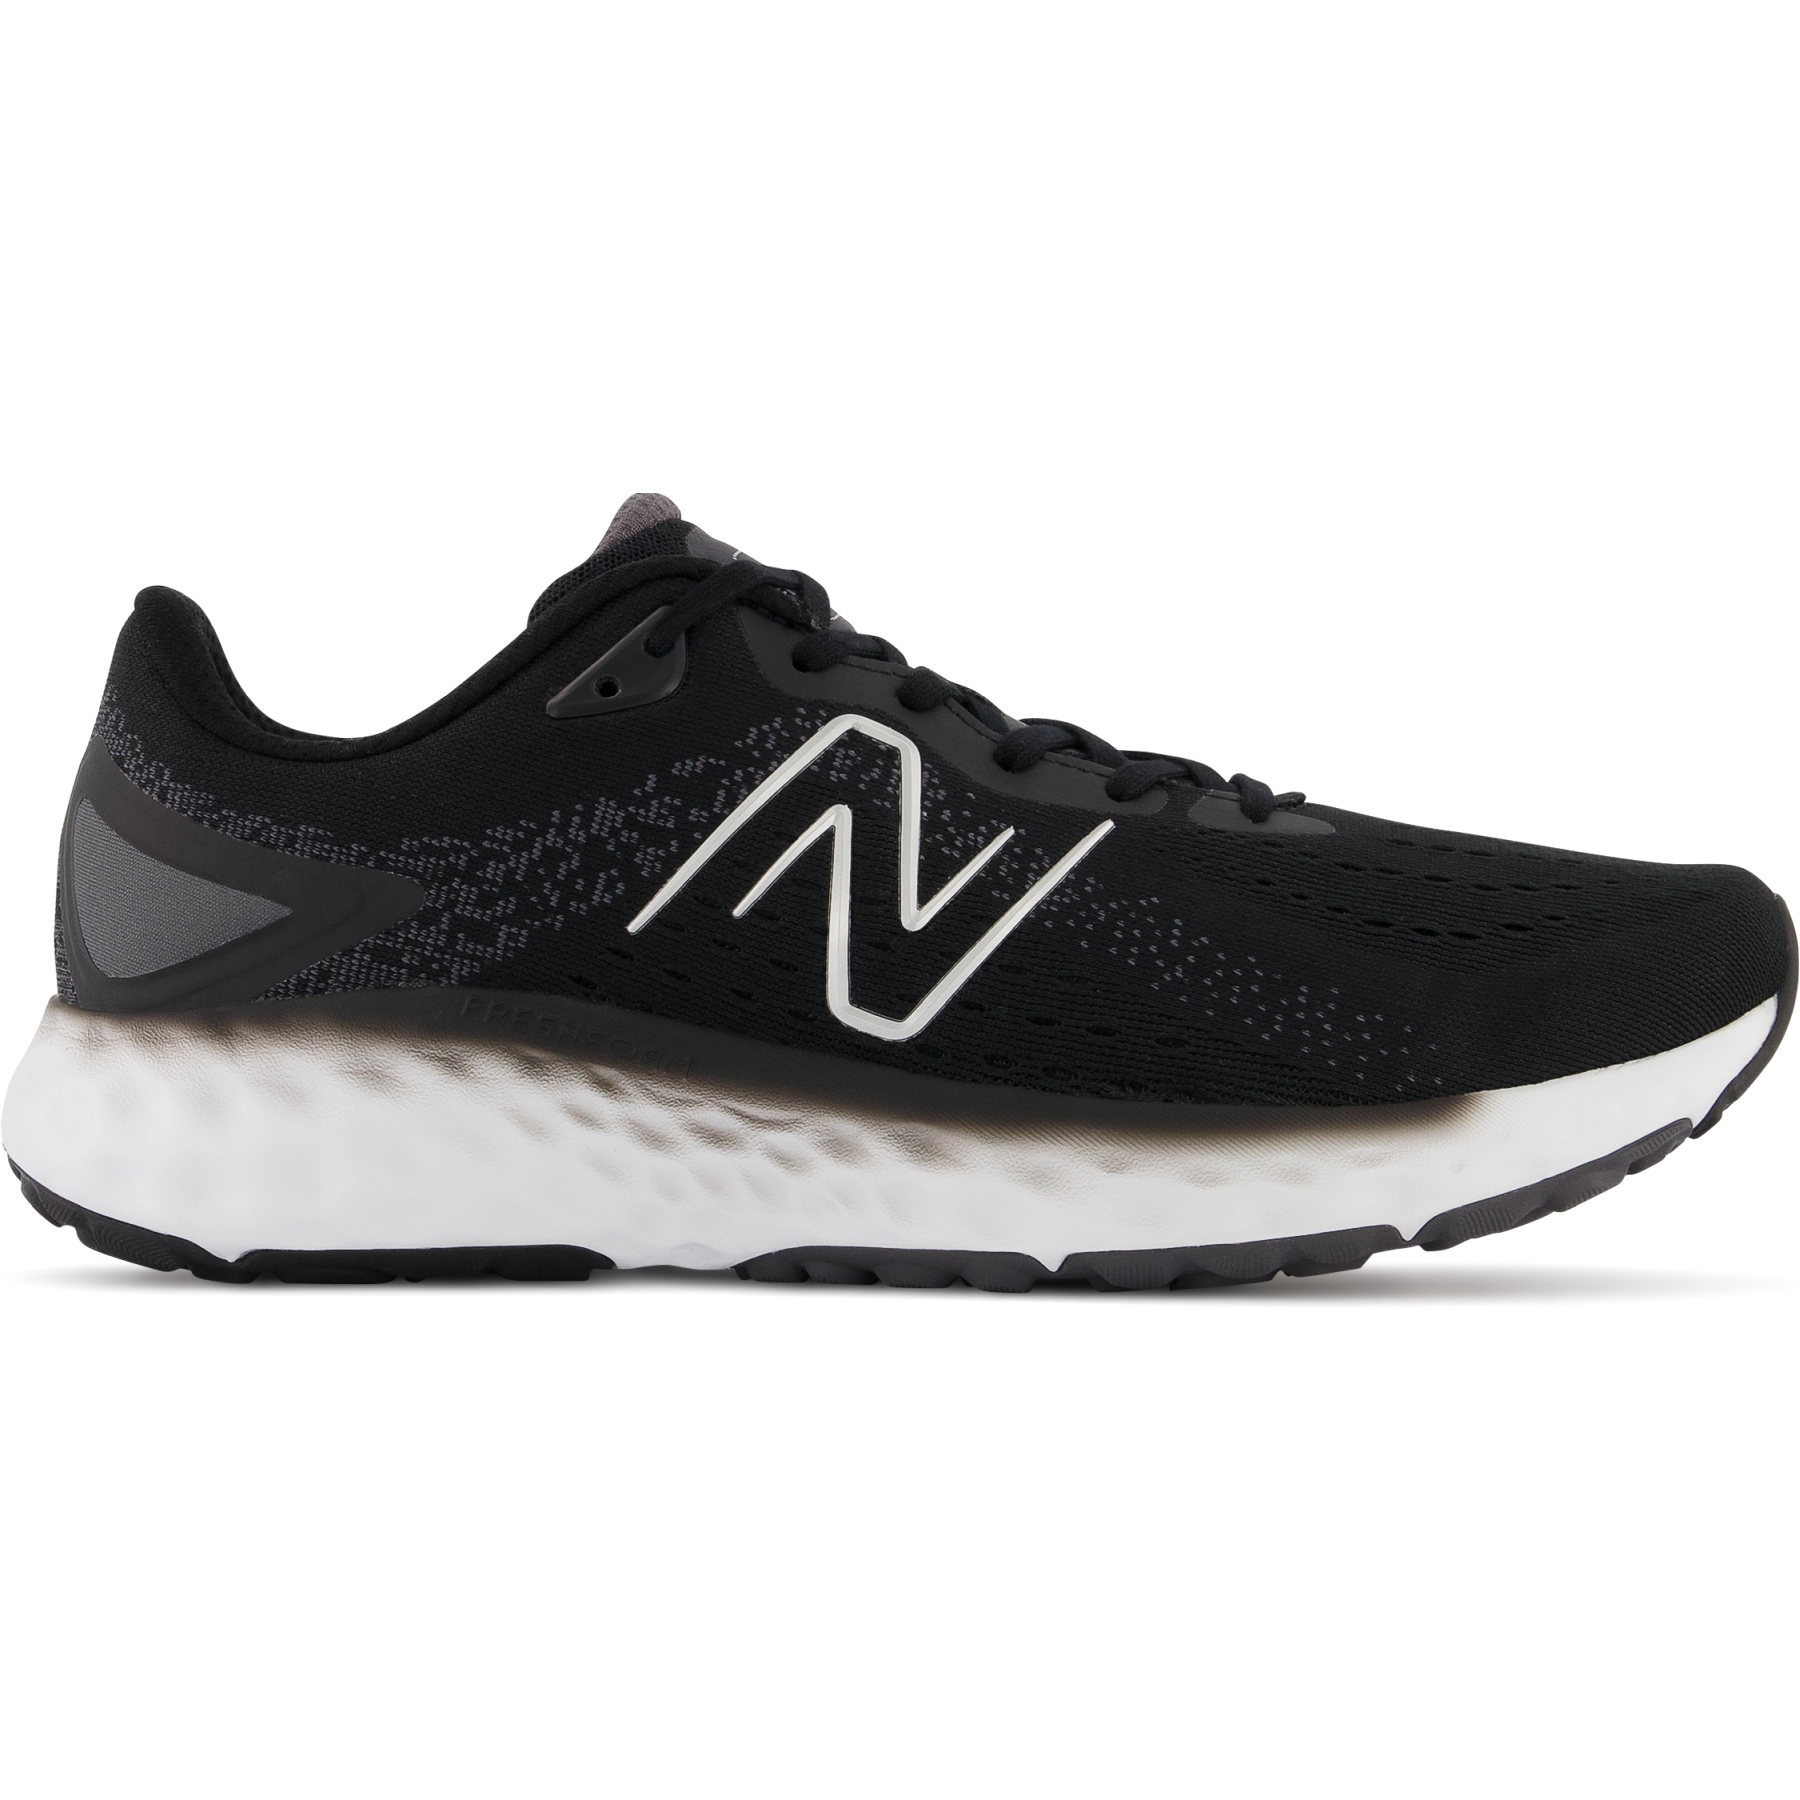 Productfoto van New Balance Fresh Foam Evoz v2 Running Shoes - Black/White